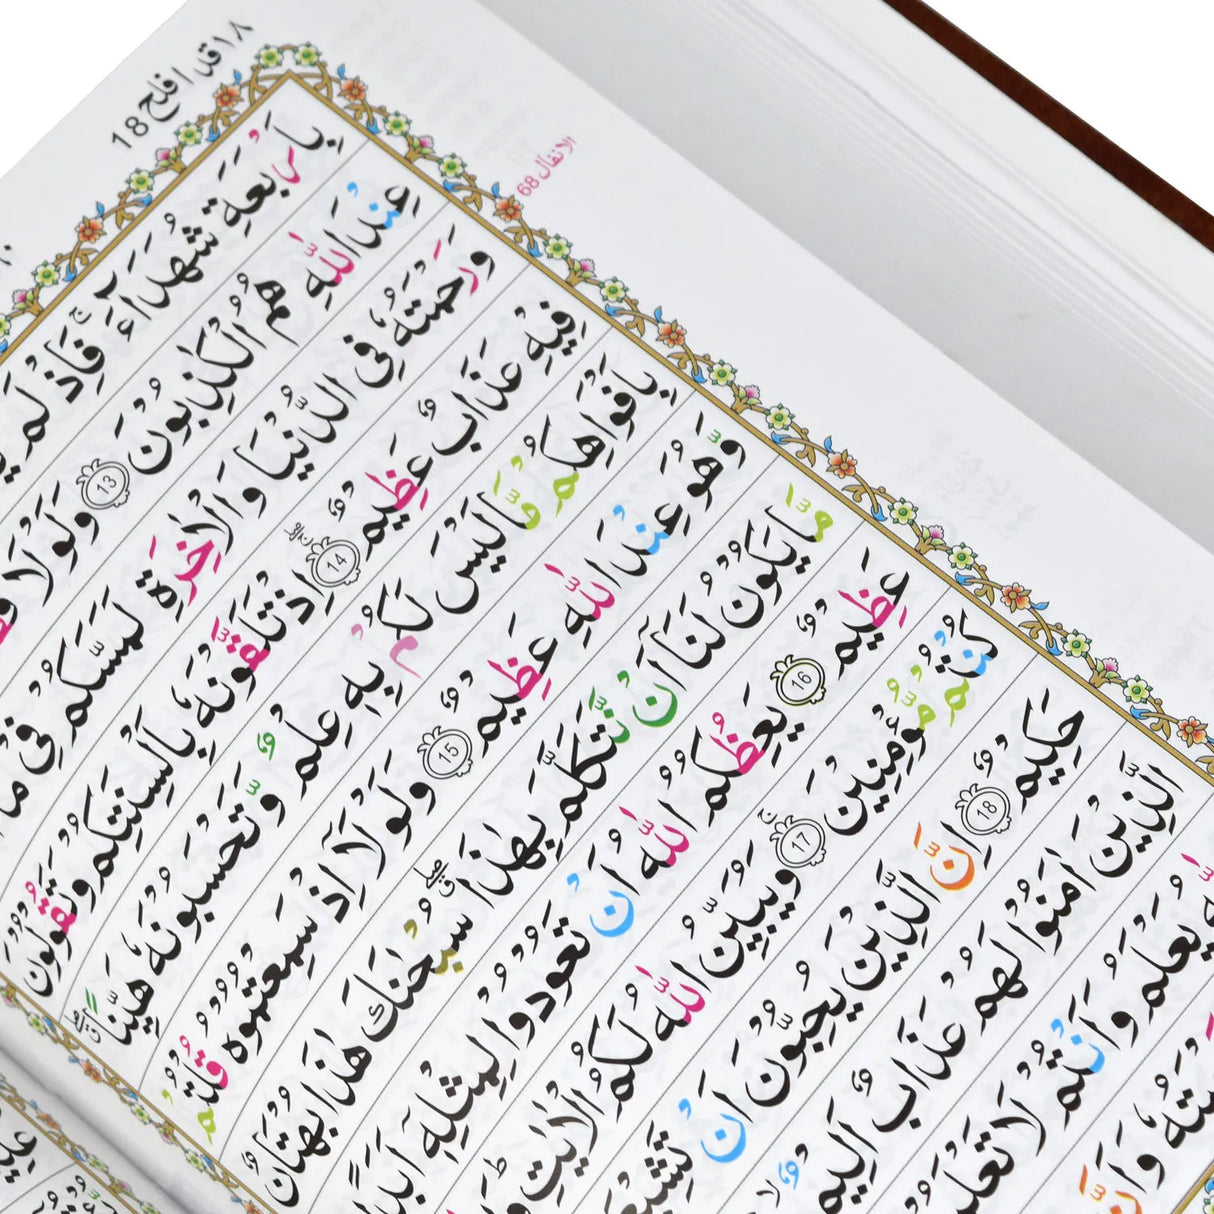 Quran Majeed 118 – 13 Lined (Tajweed)